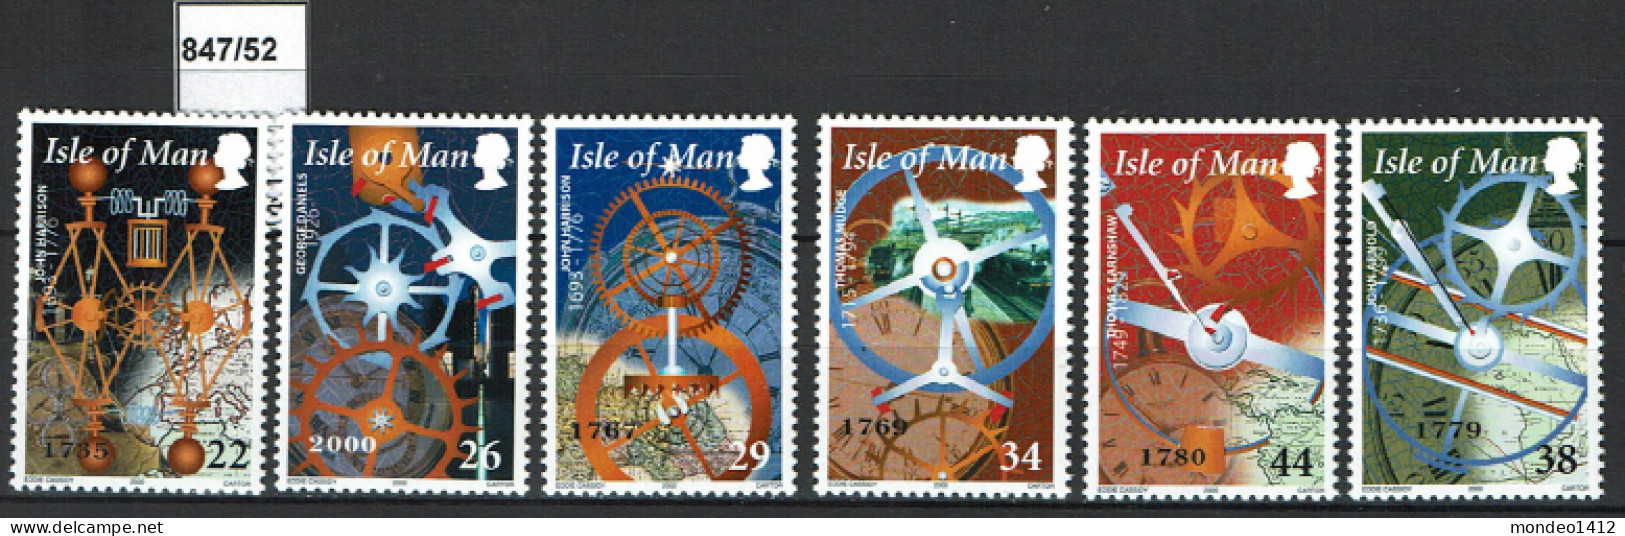 Isle Of Man - 2000 - MNH - Clocks, Horloges, Uurwerken - Detail Mechanisme - Isle Of Man